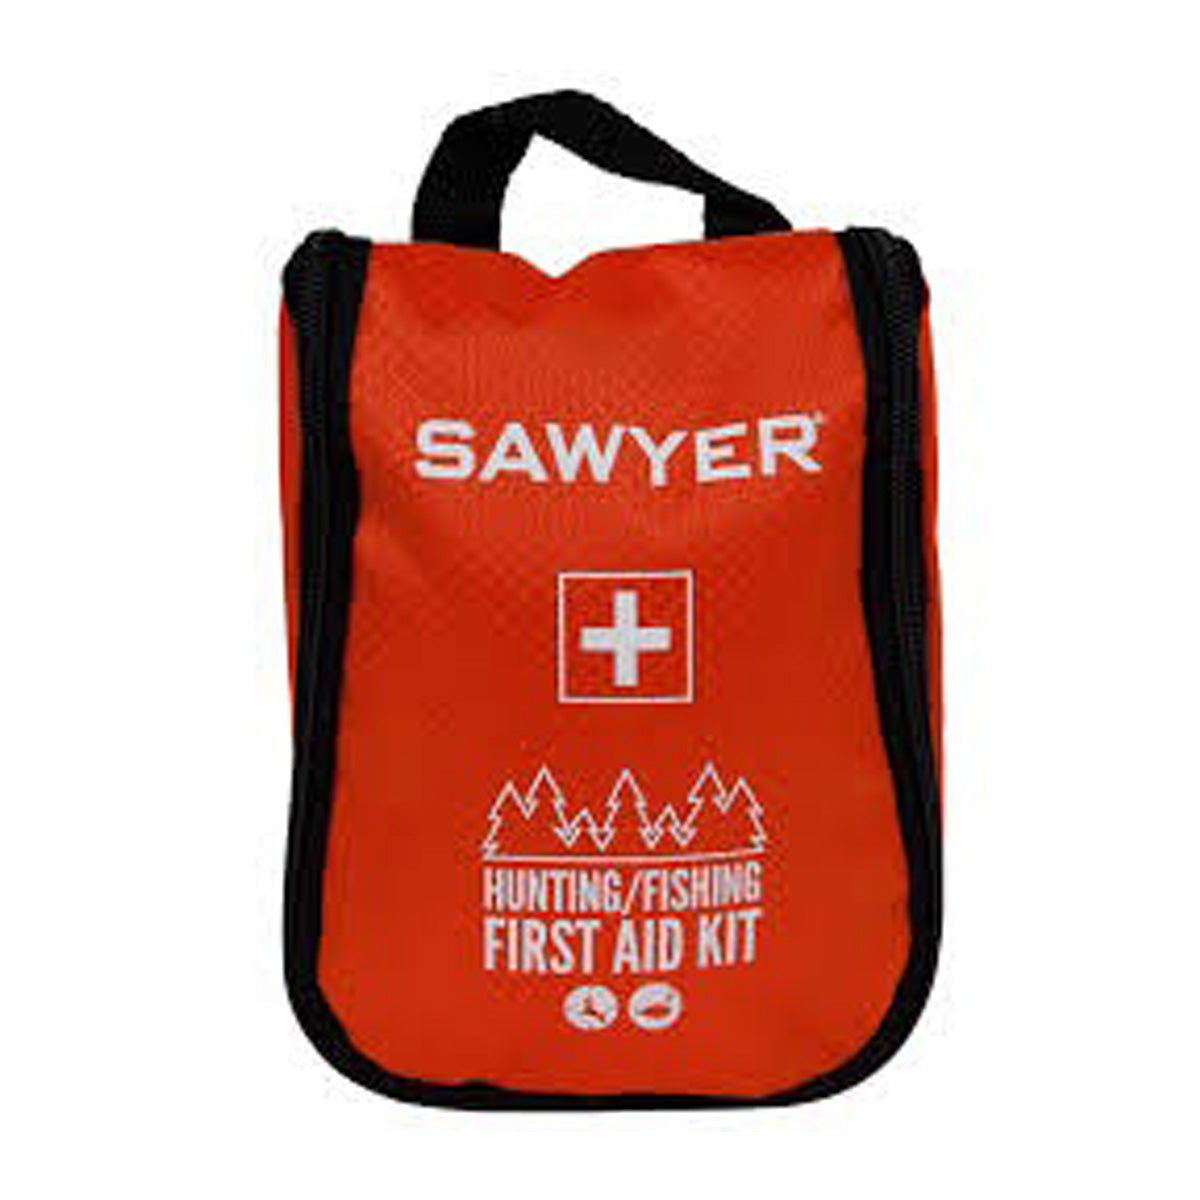 Sawyer Hunting / Fishing First Aid Kit